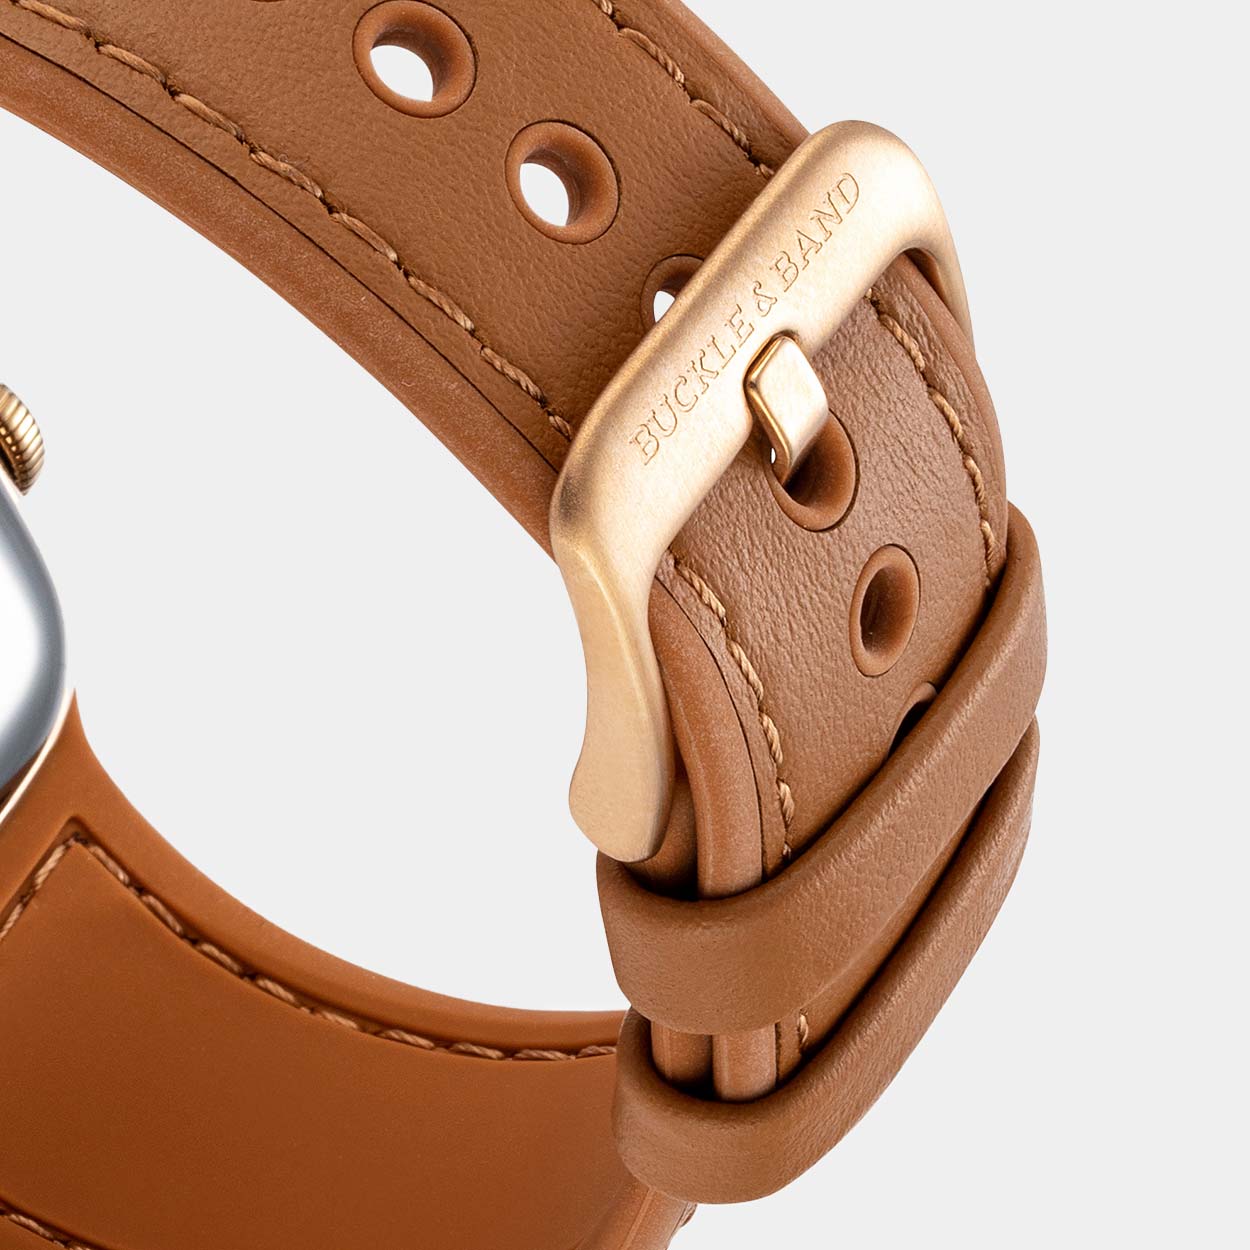 Mona Hybrid Sport/Leather Apple Watch Strap - Brown - Buckle & Band - MON-38-BRN-GL